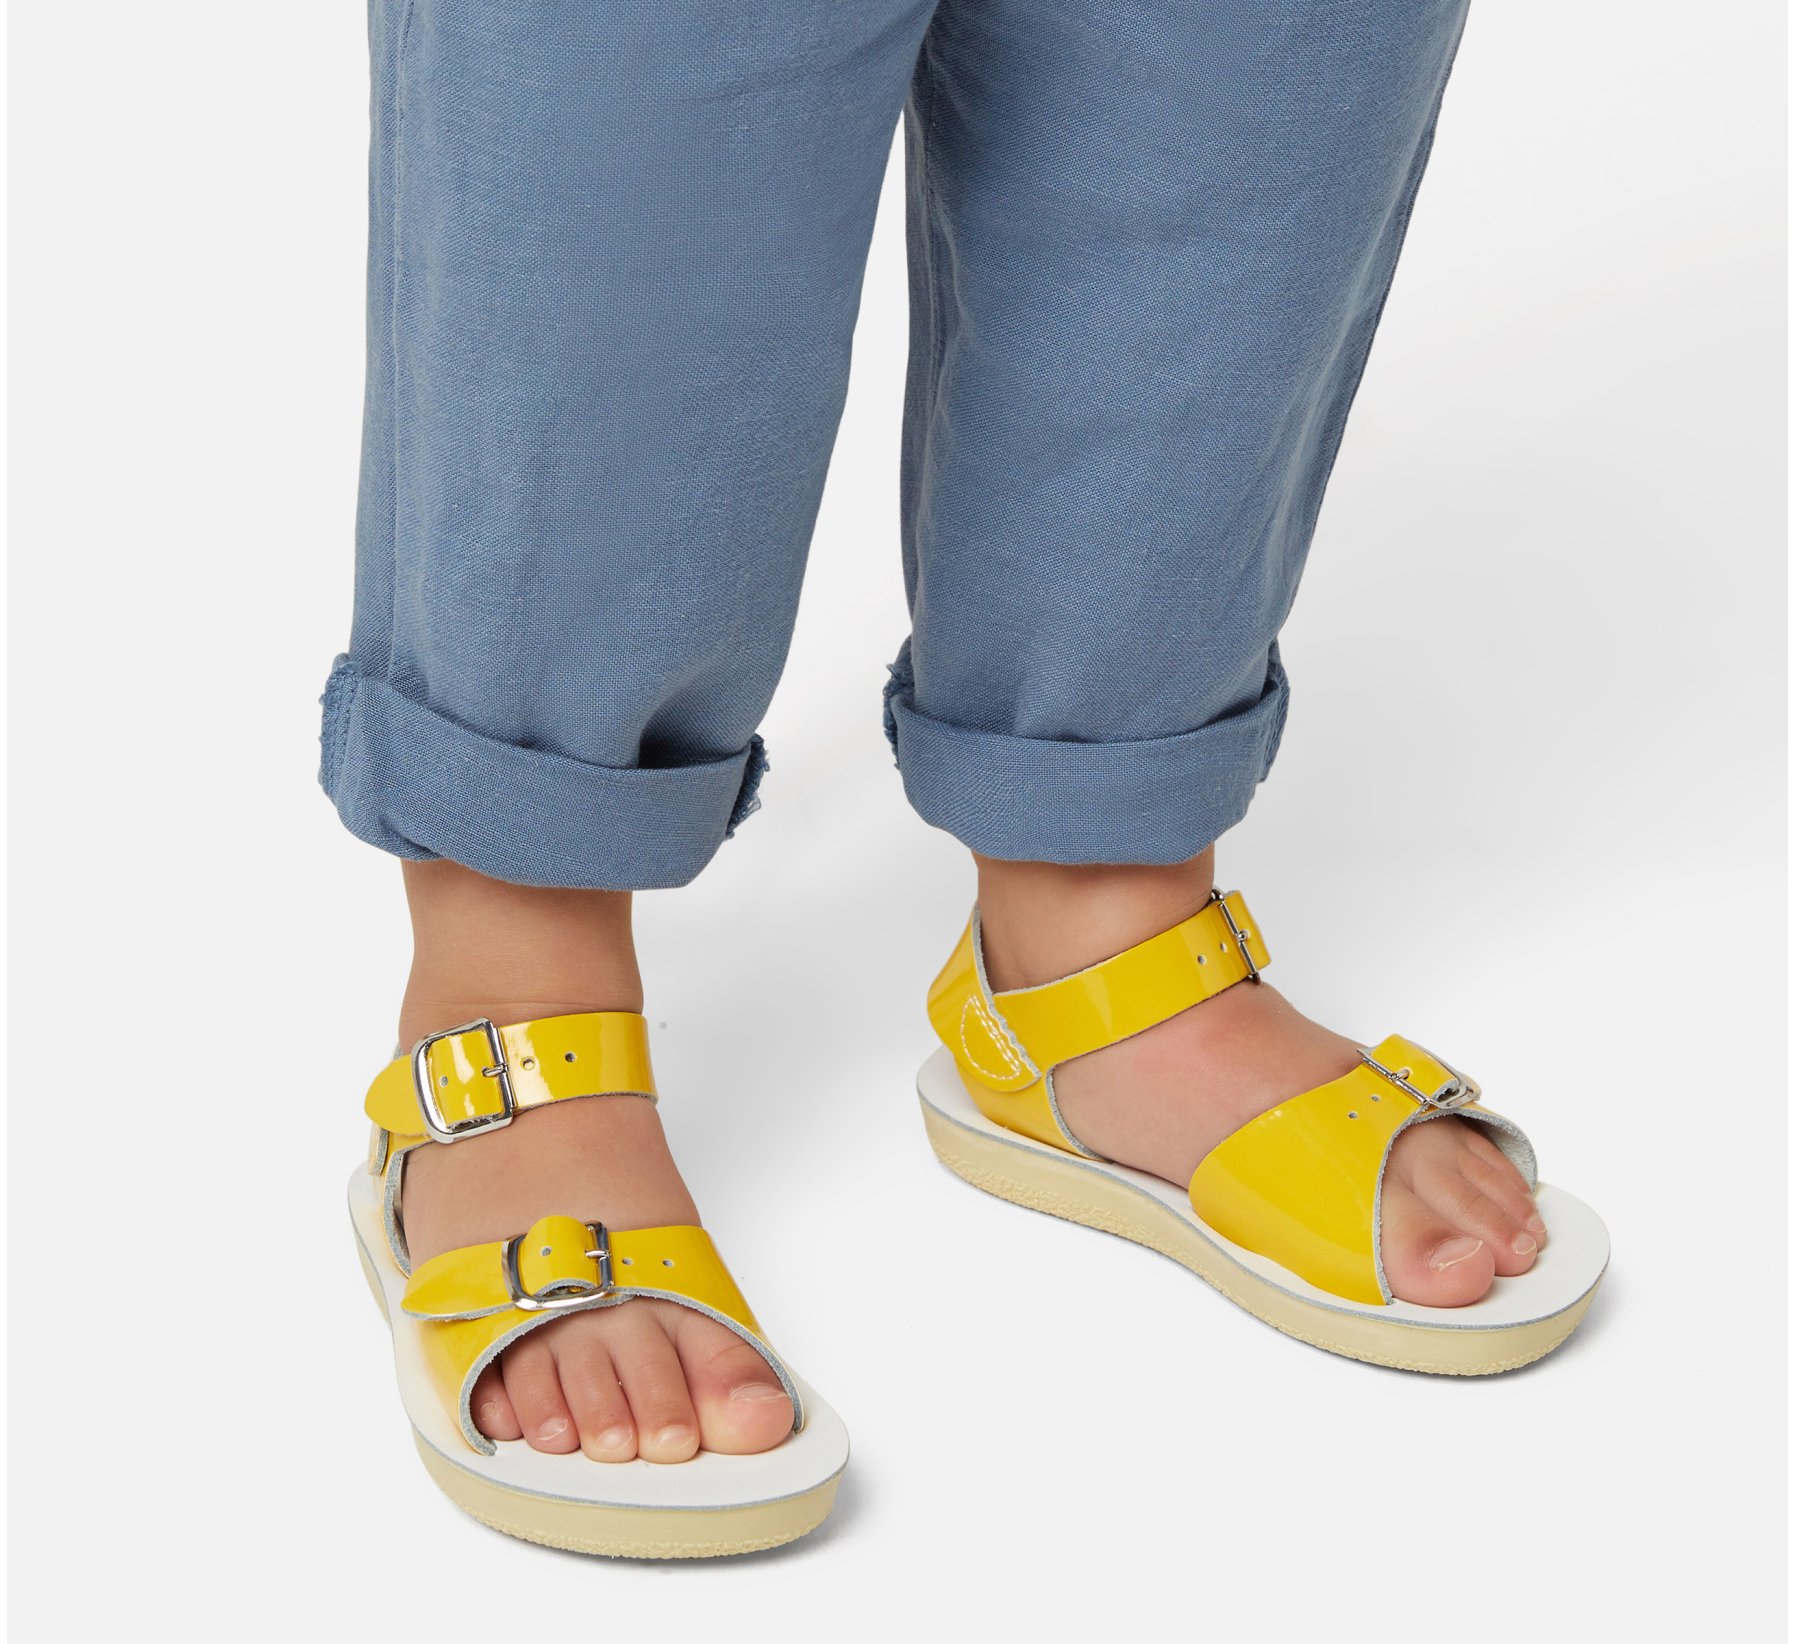 Surfer Shiny Yellow Kids Sandals - Salt Water Sandals